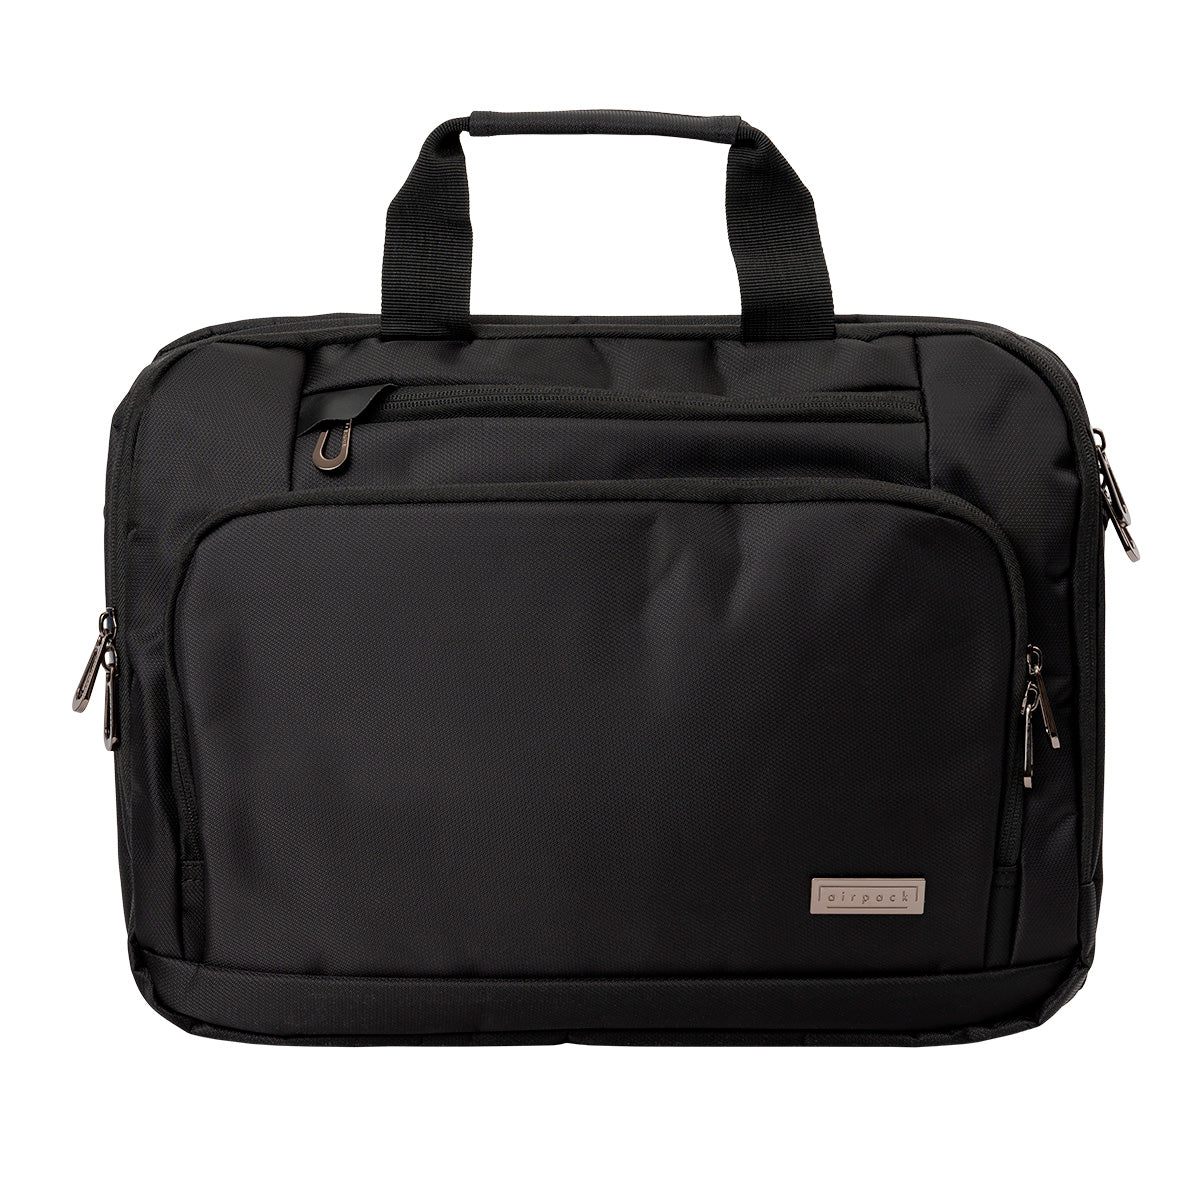 Airpack Briefcase Black